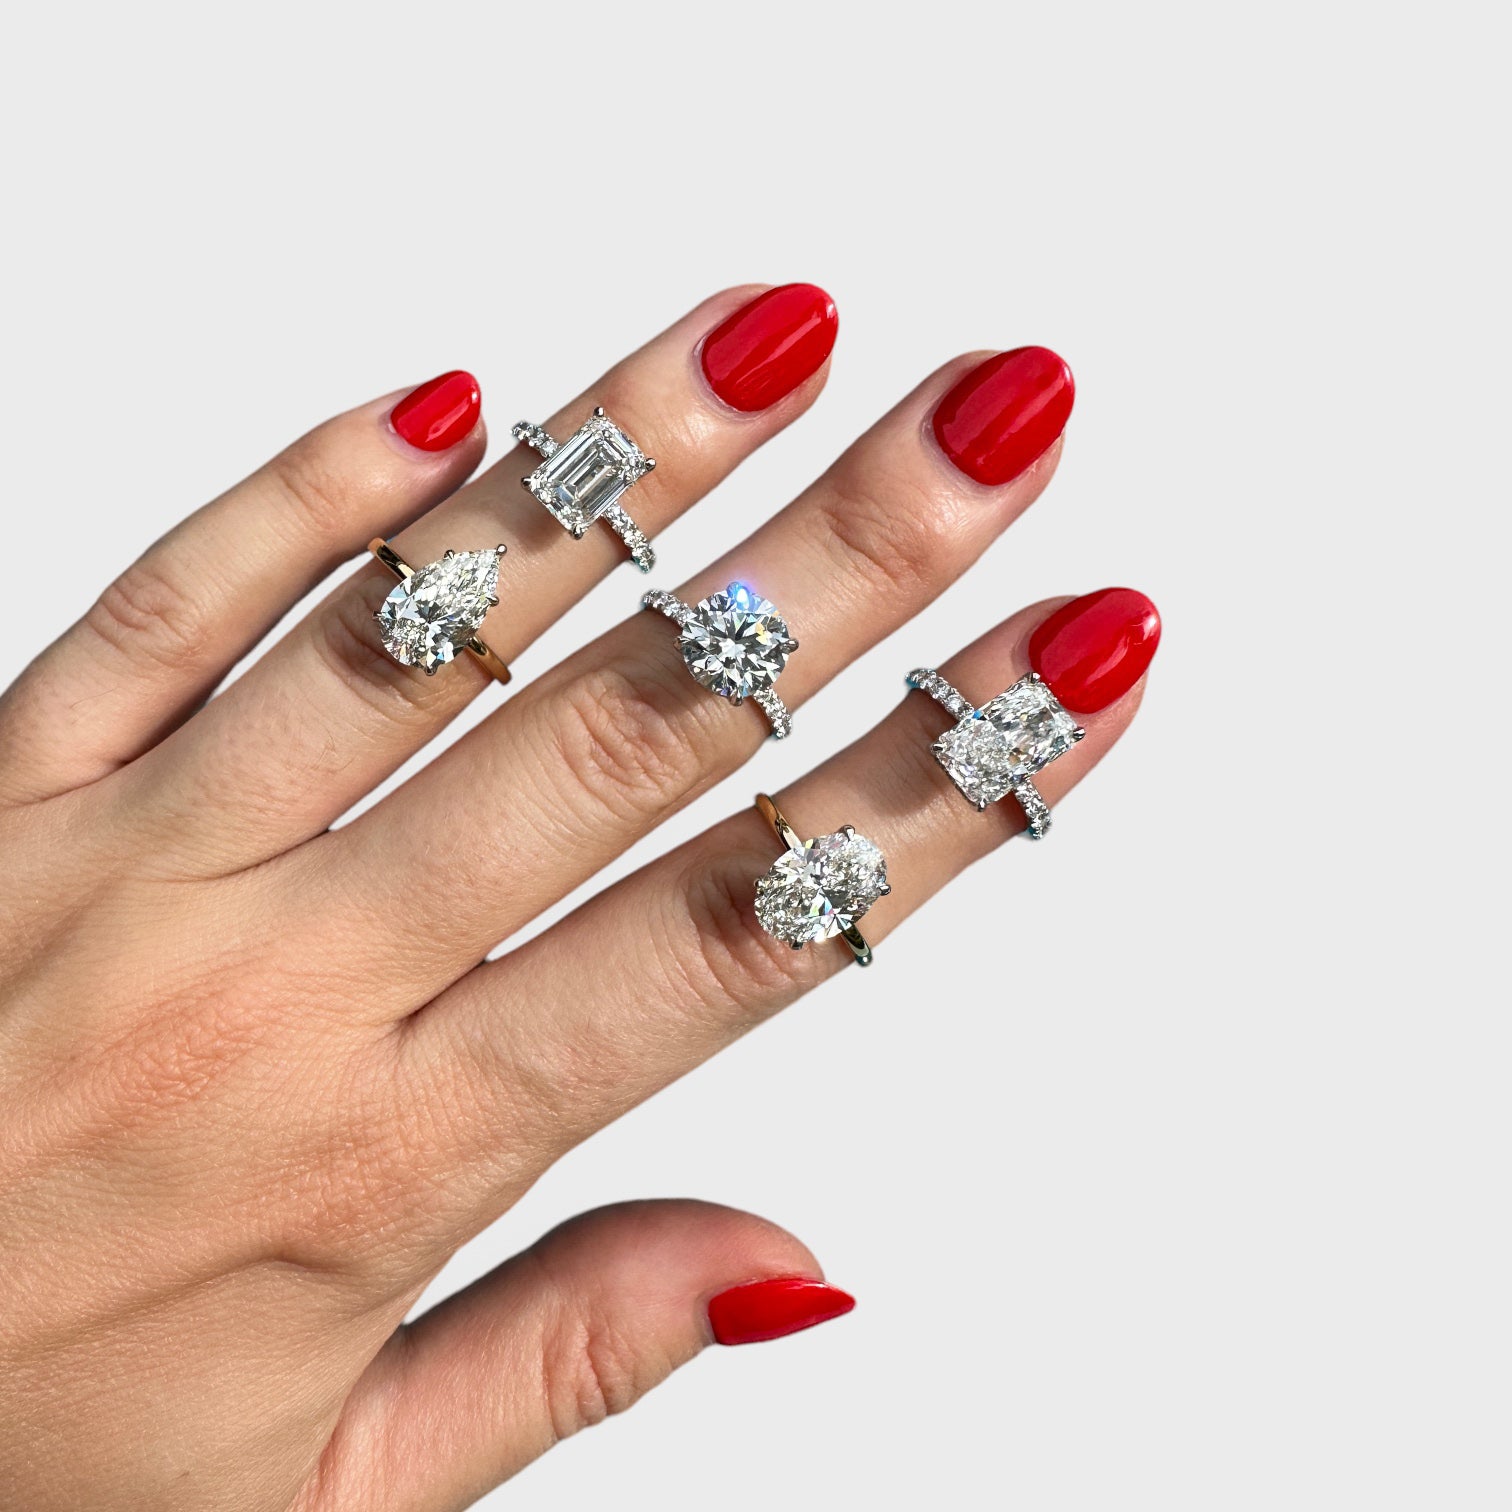 3 carat Halo Diamond Ring | Bling Advisor Product